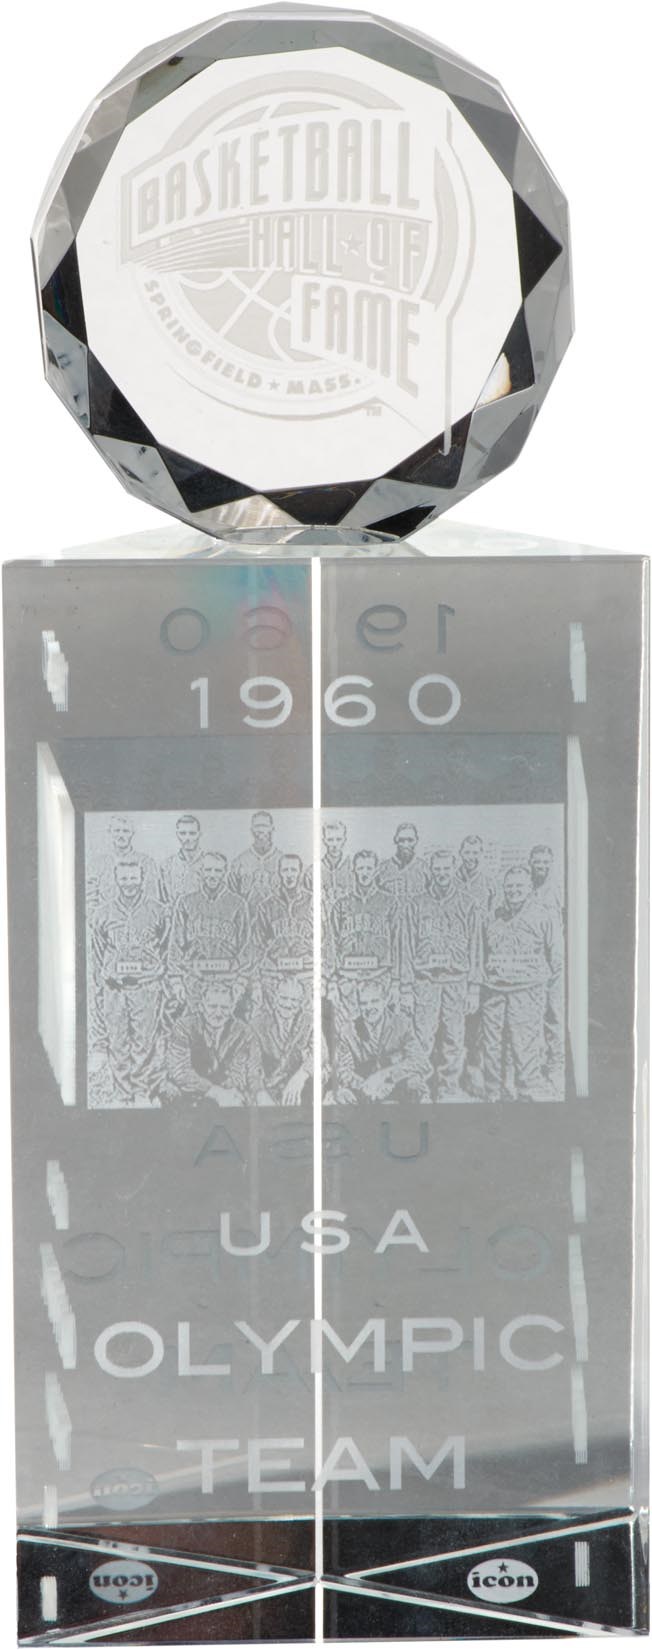 - Oscar Robertson Basketball Hall of Fame Induction Award for 1960 Olympic Team